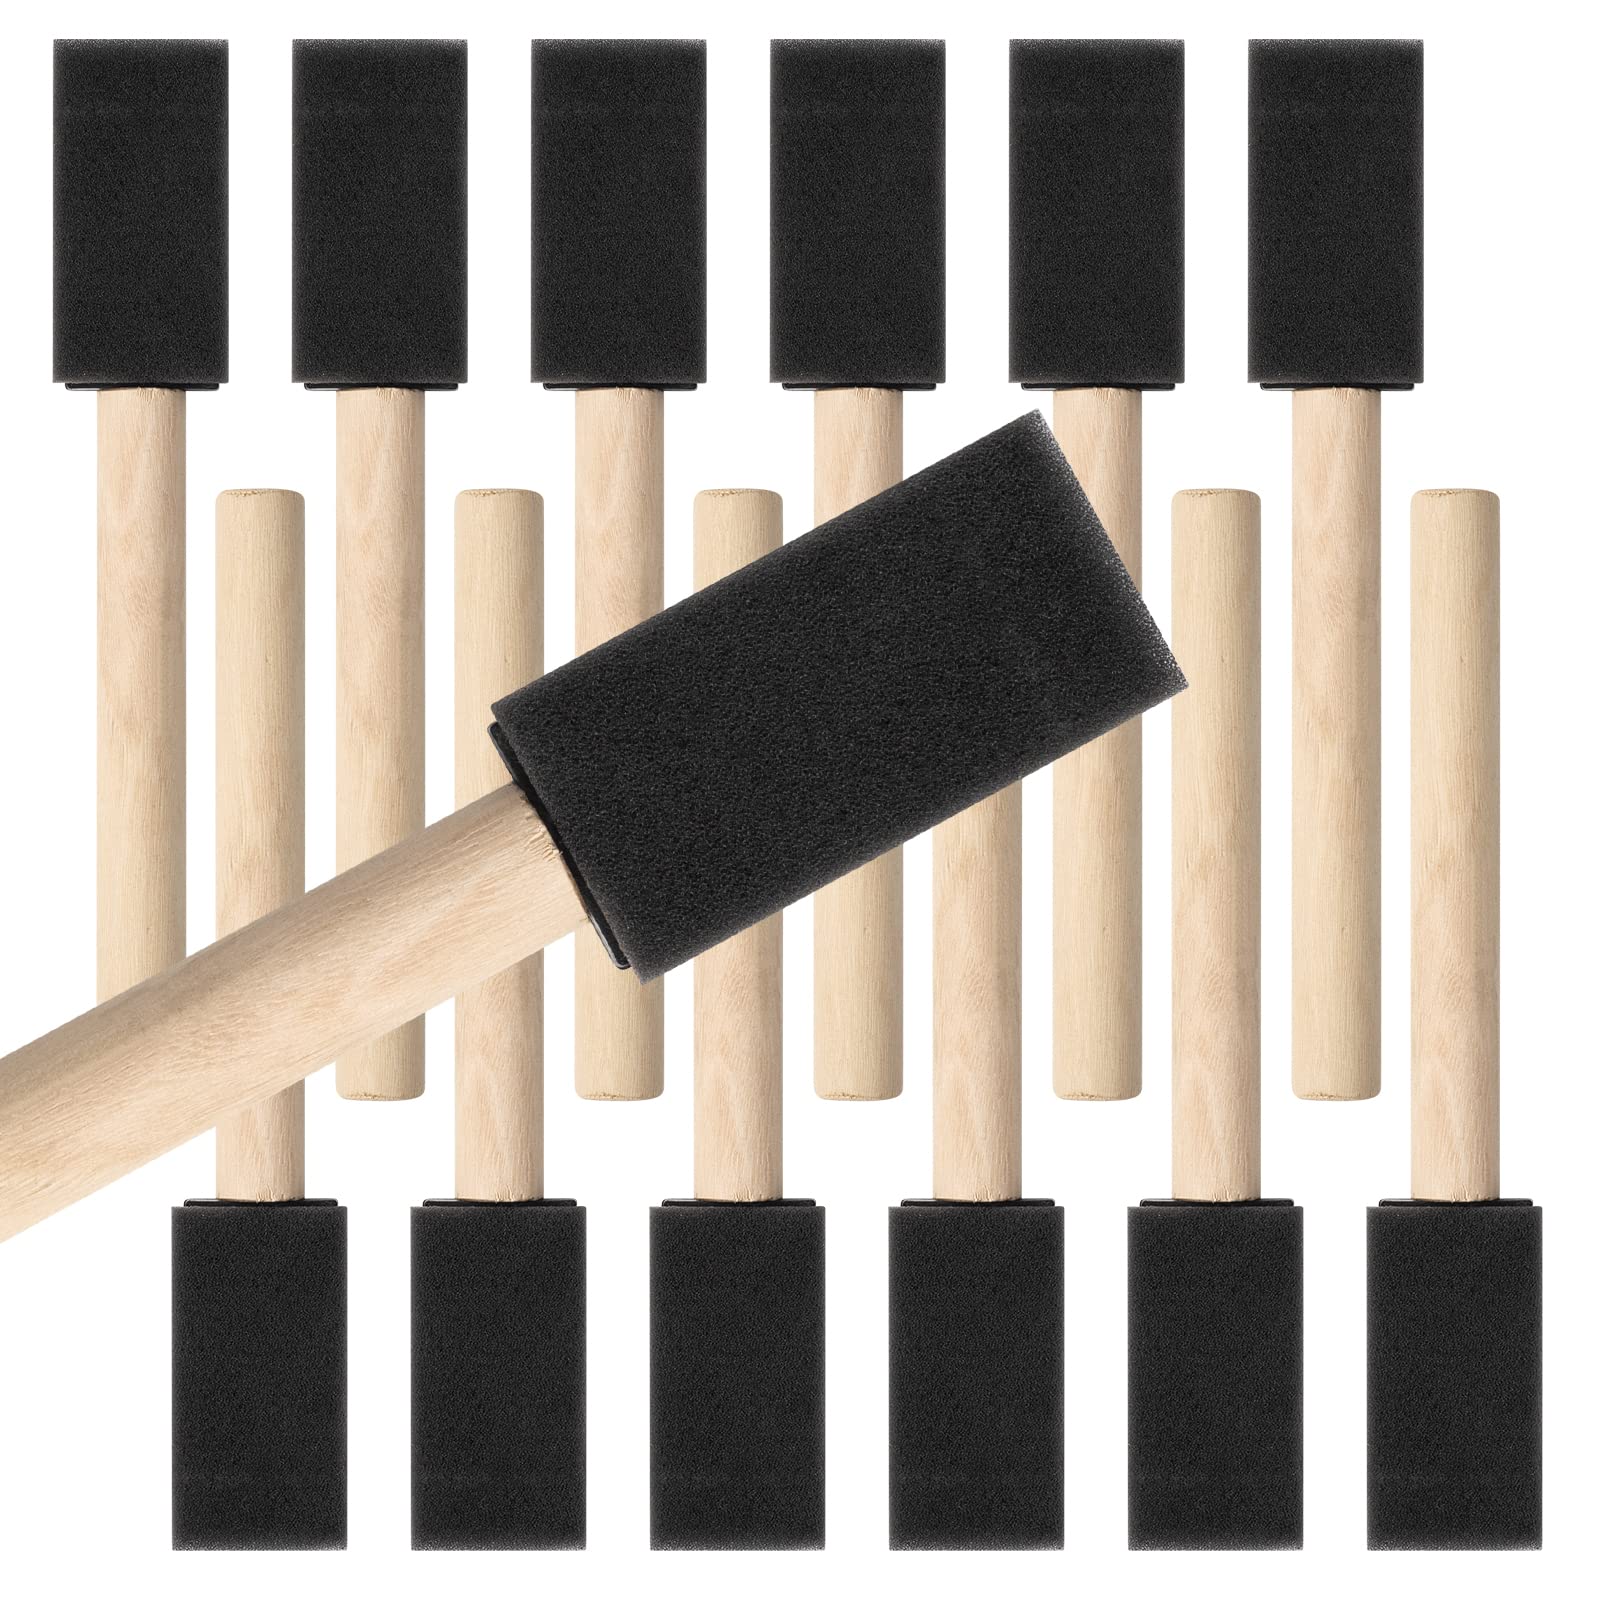 Mister Rui-Poly Foam Paint Brushes, 12 Pack, 1 Inch Sponge Brushes